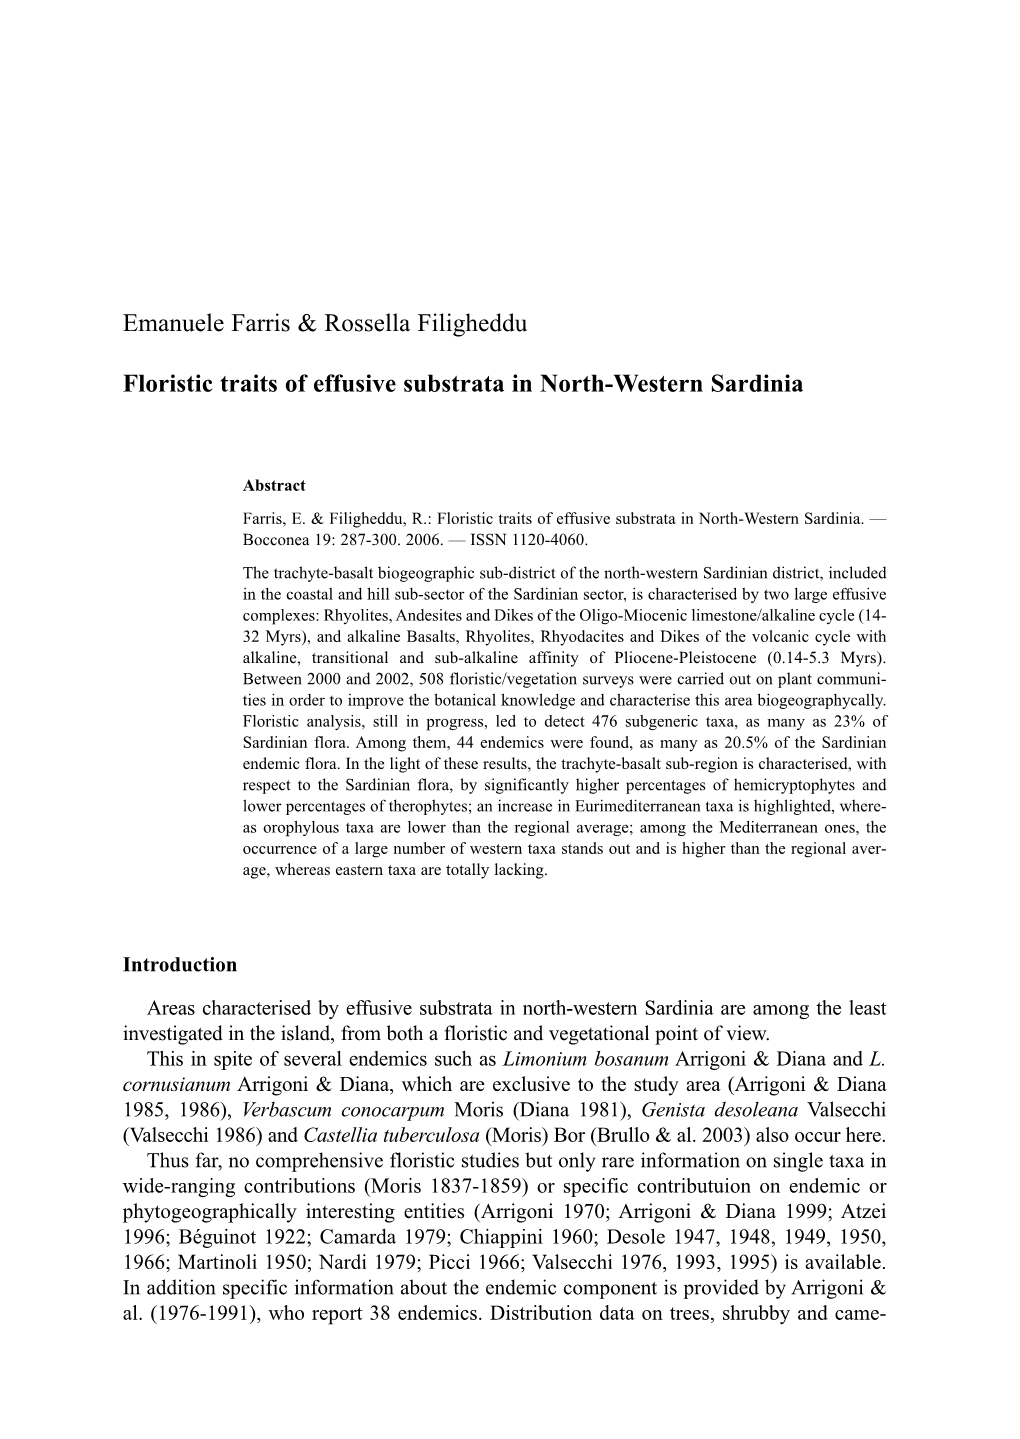 Emanuele Farris & Rossella Filigheddu Floristic Traits of Effusive